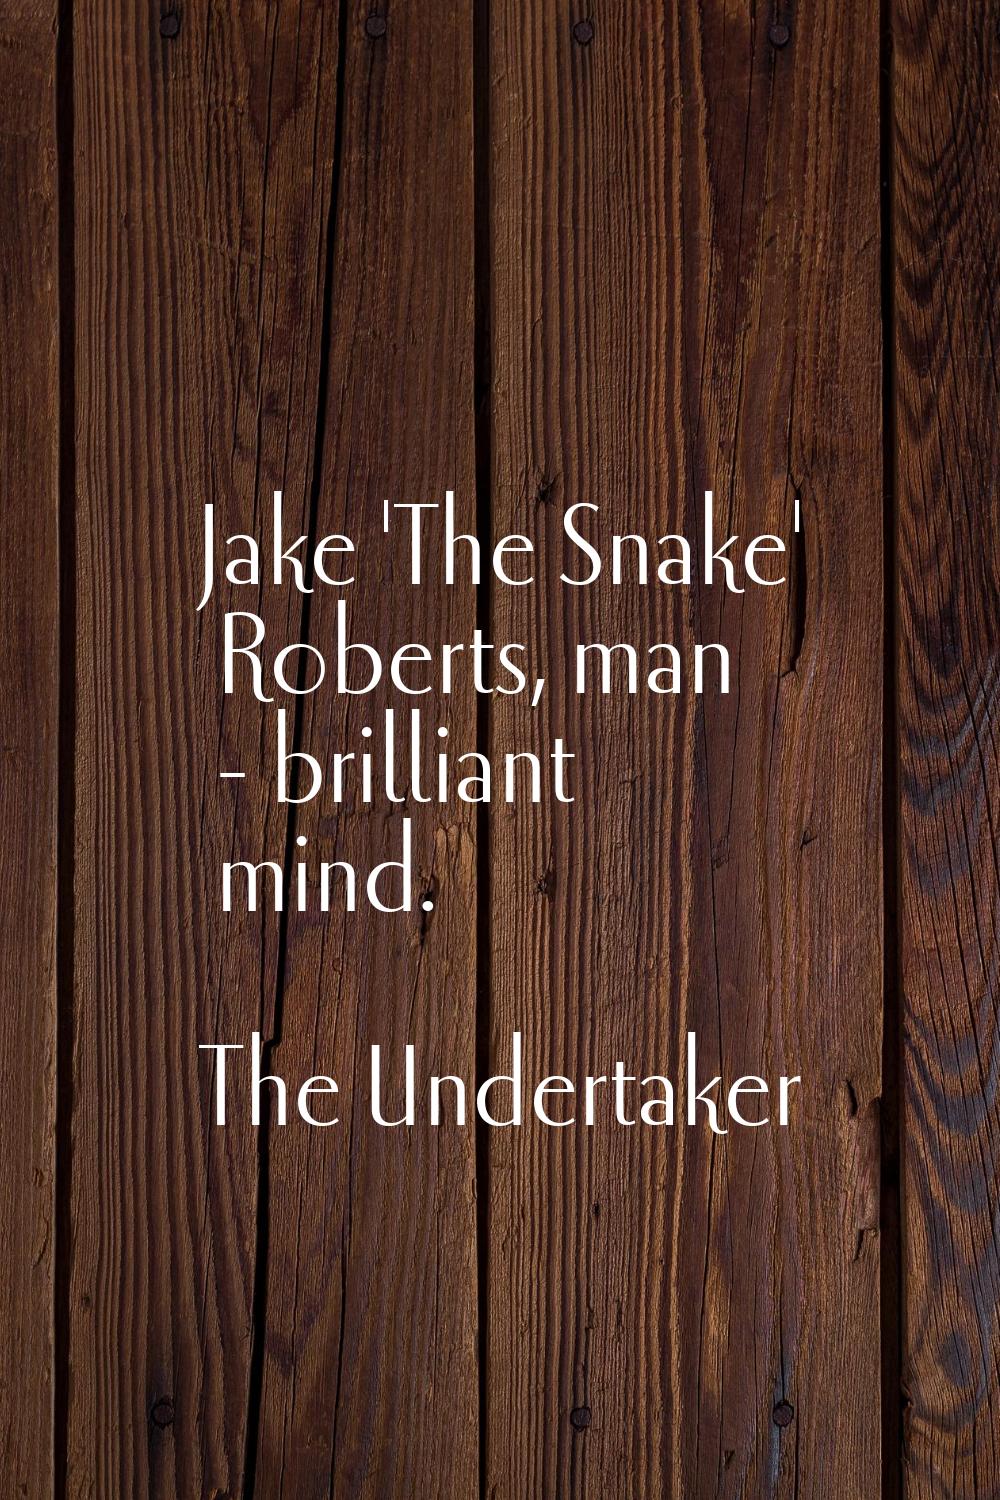 Jake 'The Snake' Roberts, man - brilliant mind.